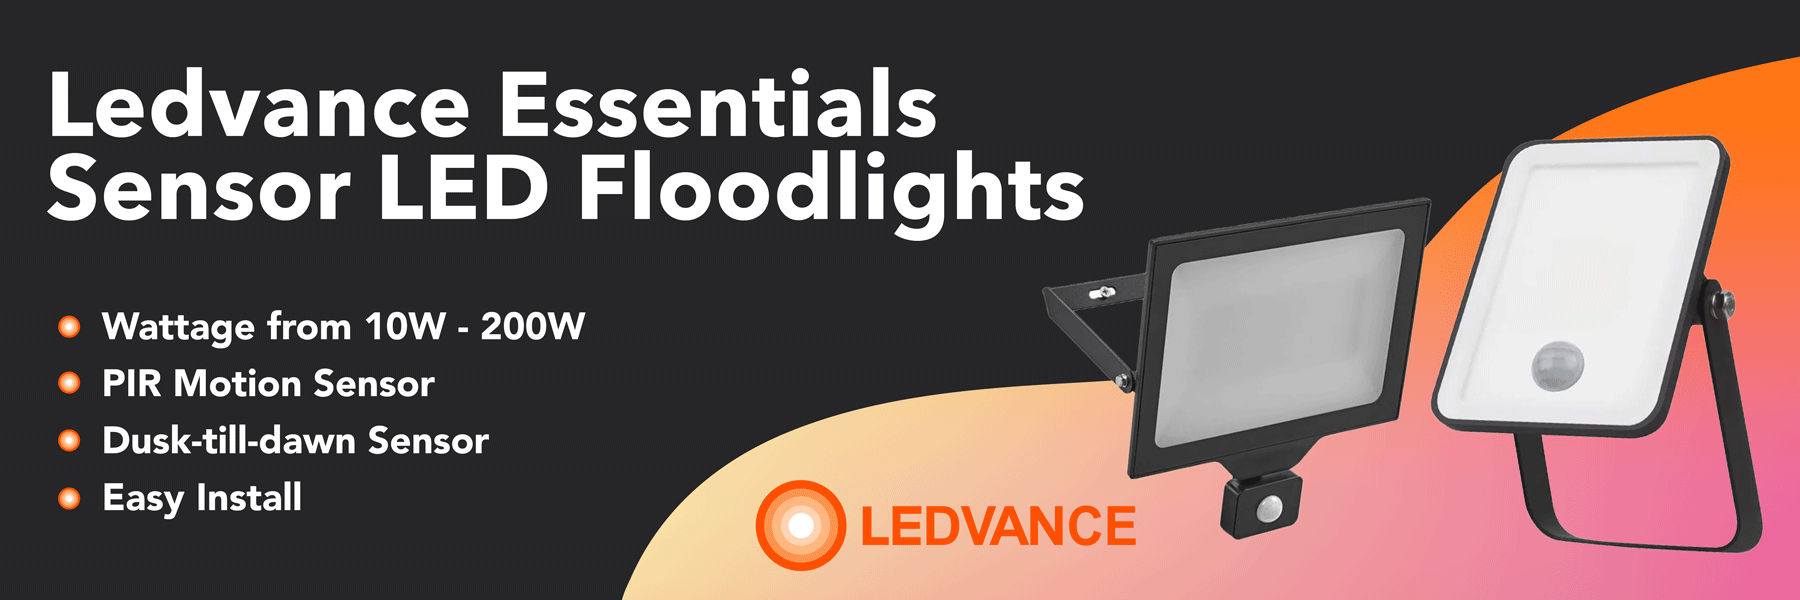 Ledvance essentials led floodlights